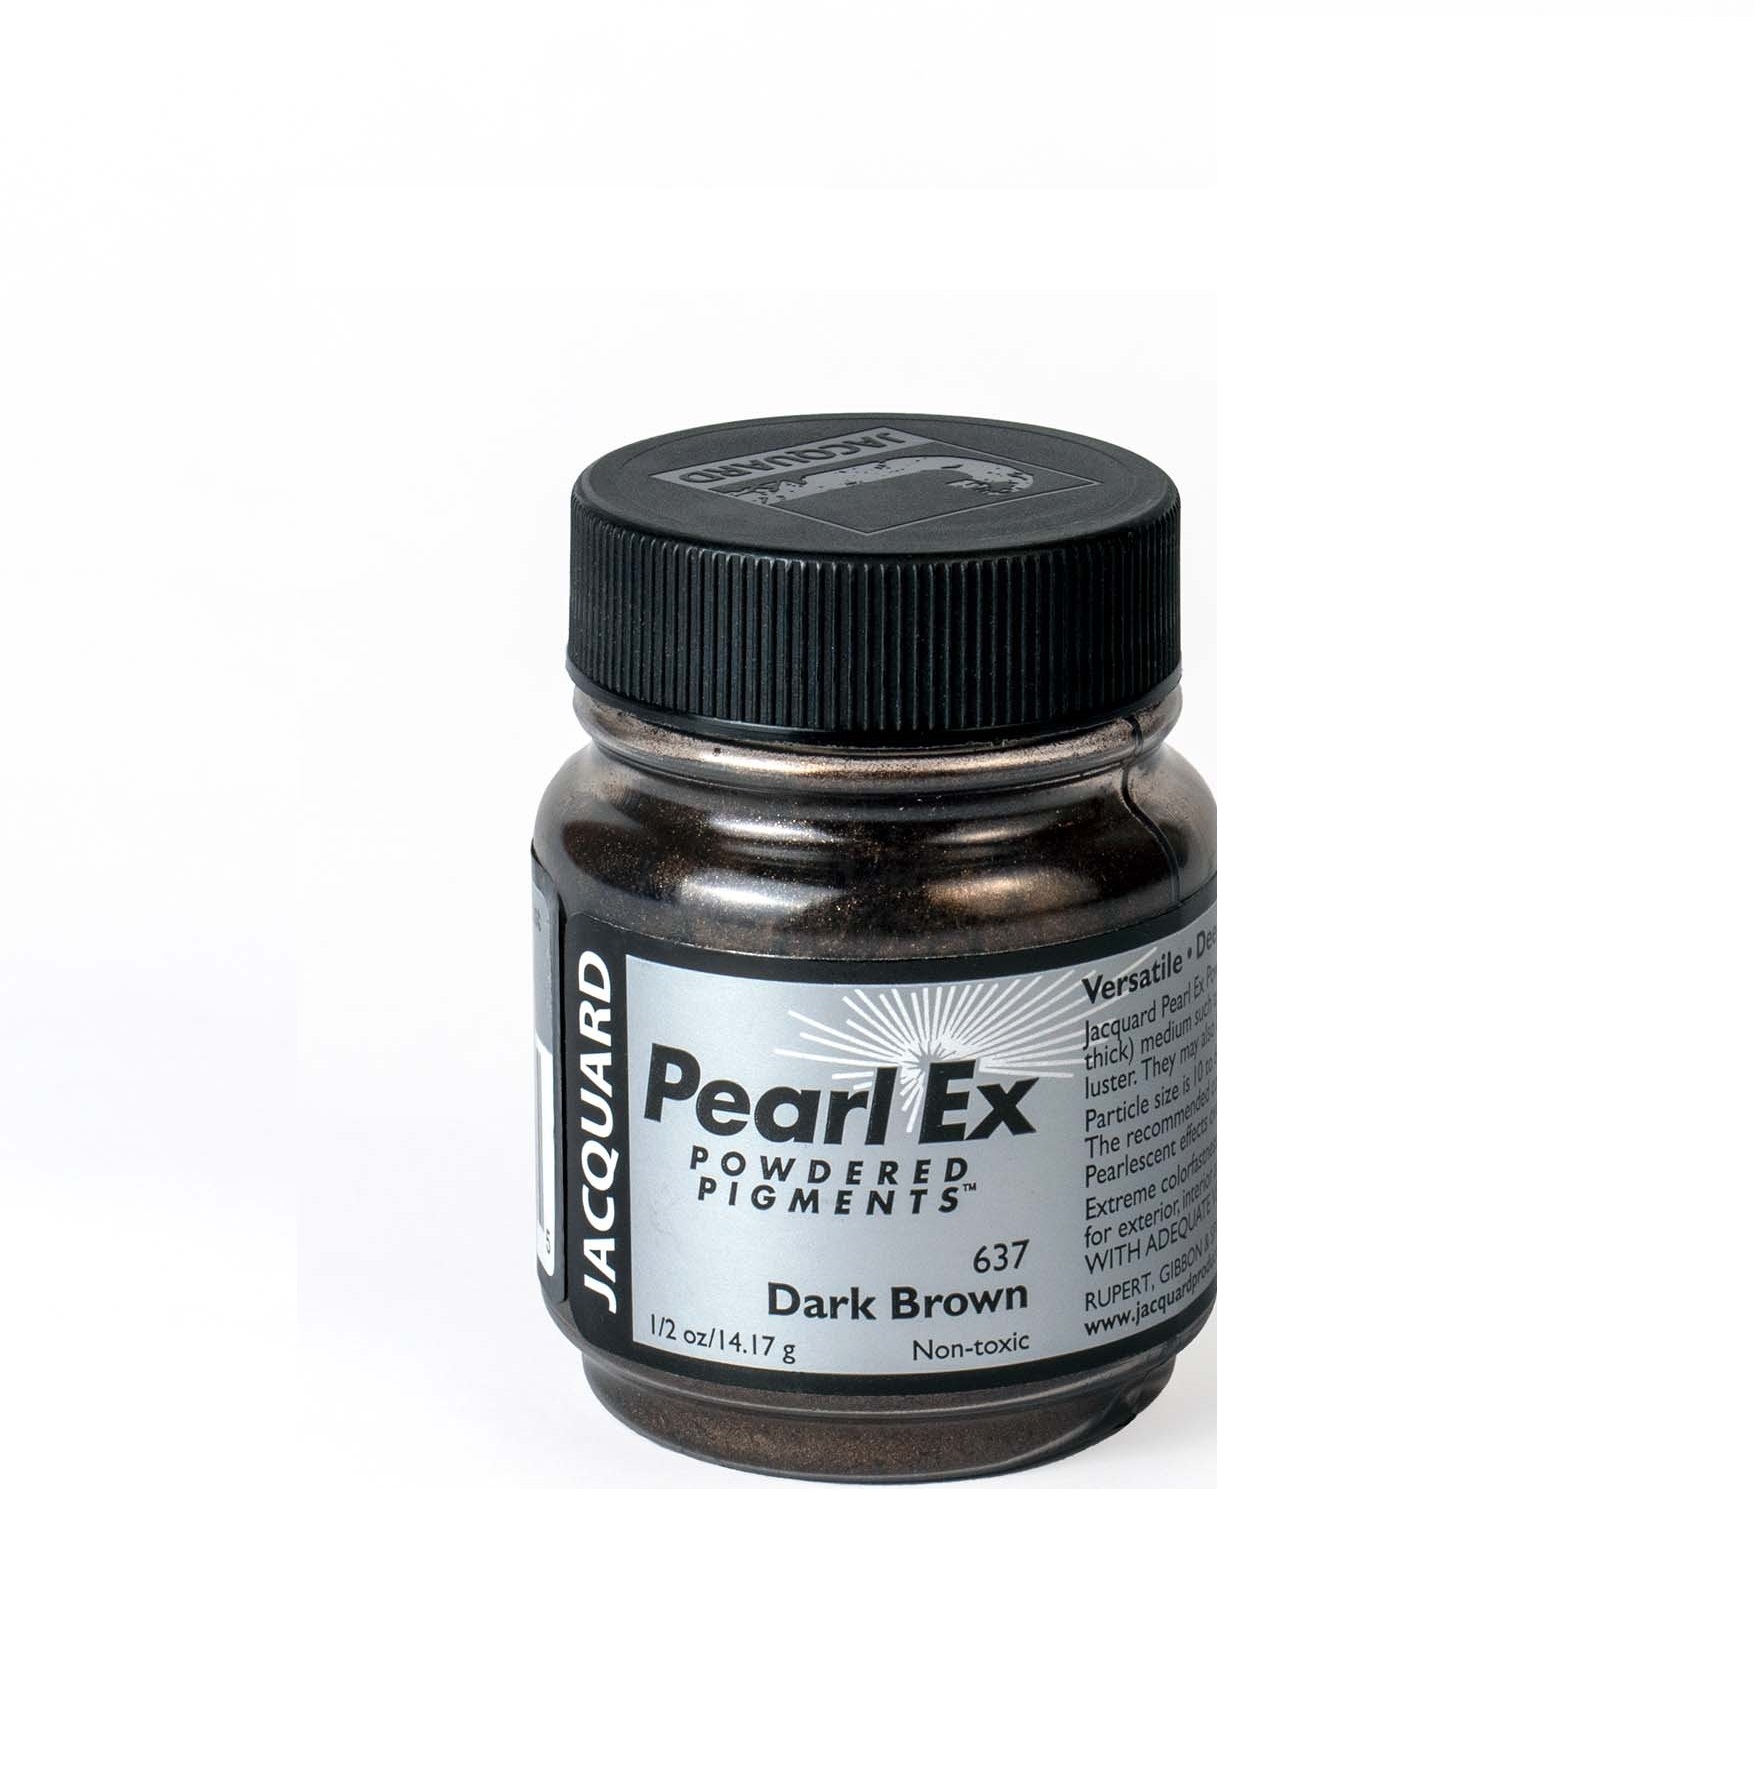 PIGMENTO PEARL EX DARK BROWN X 14,17 g